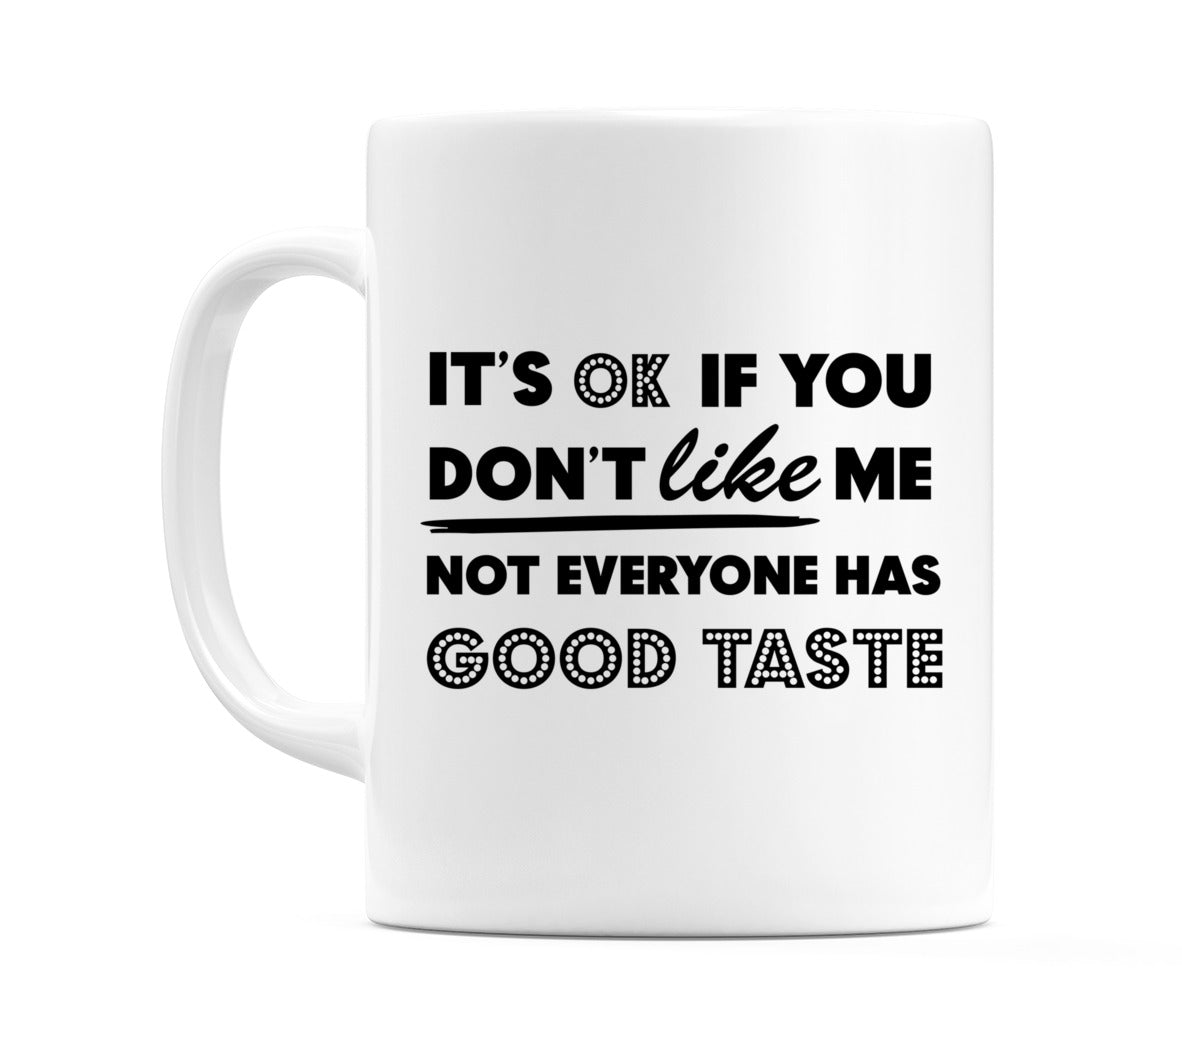 It's OK If you Don't like me not everyone has good taste Mug